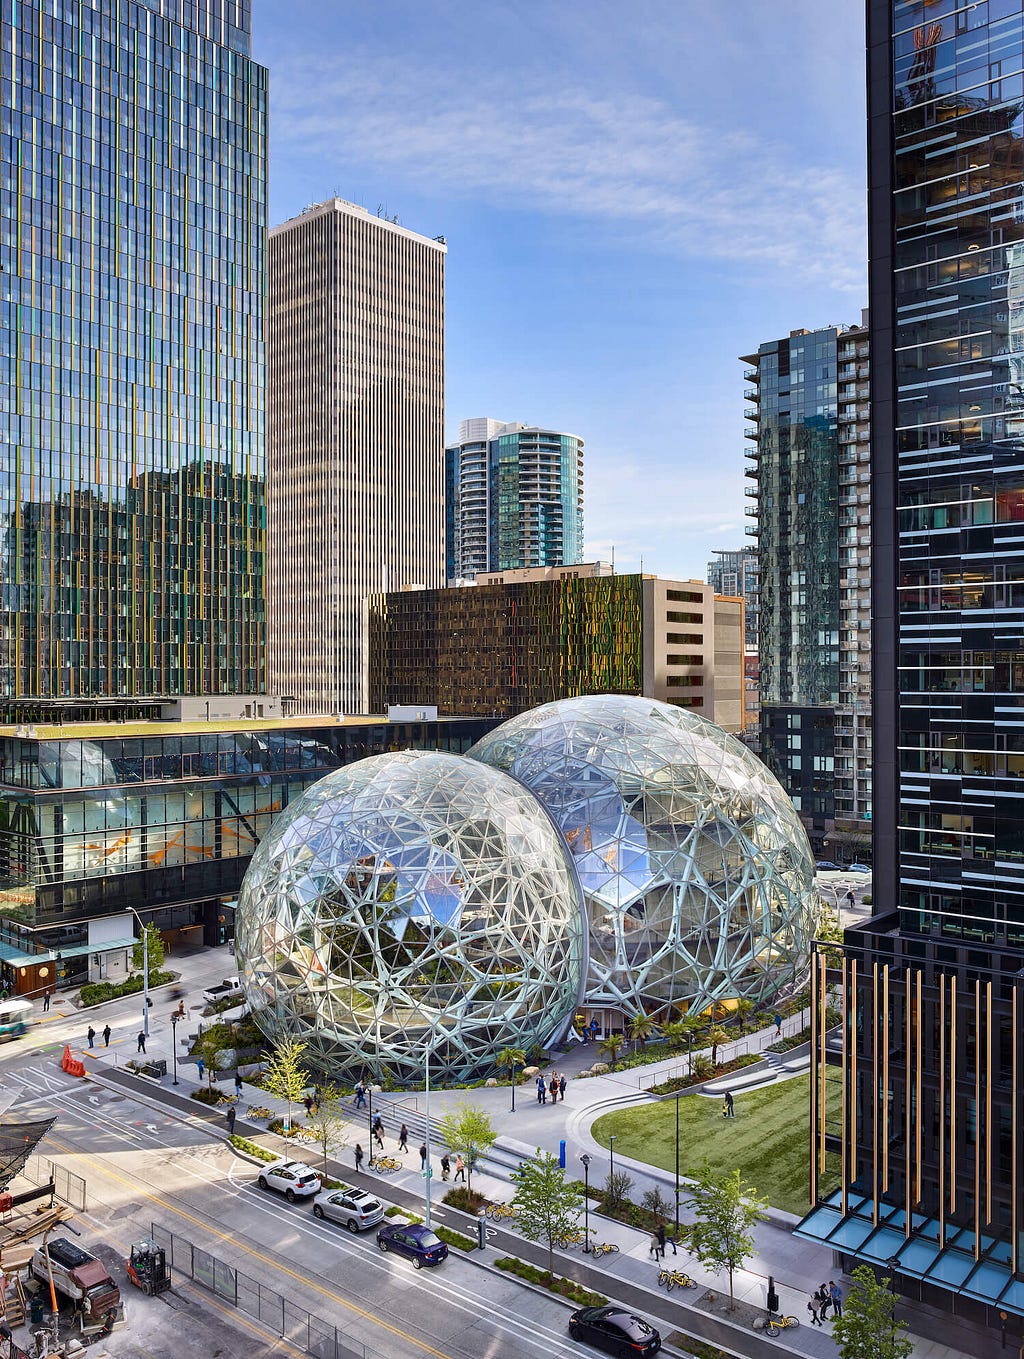 The Amazon Spheres, Seattle